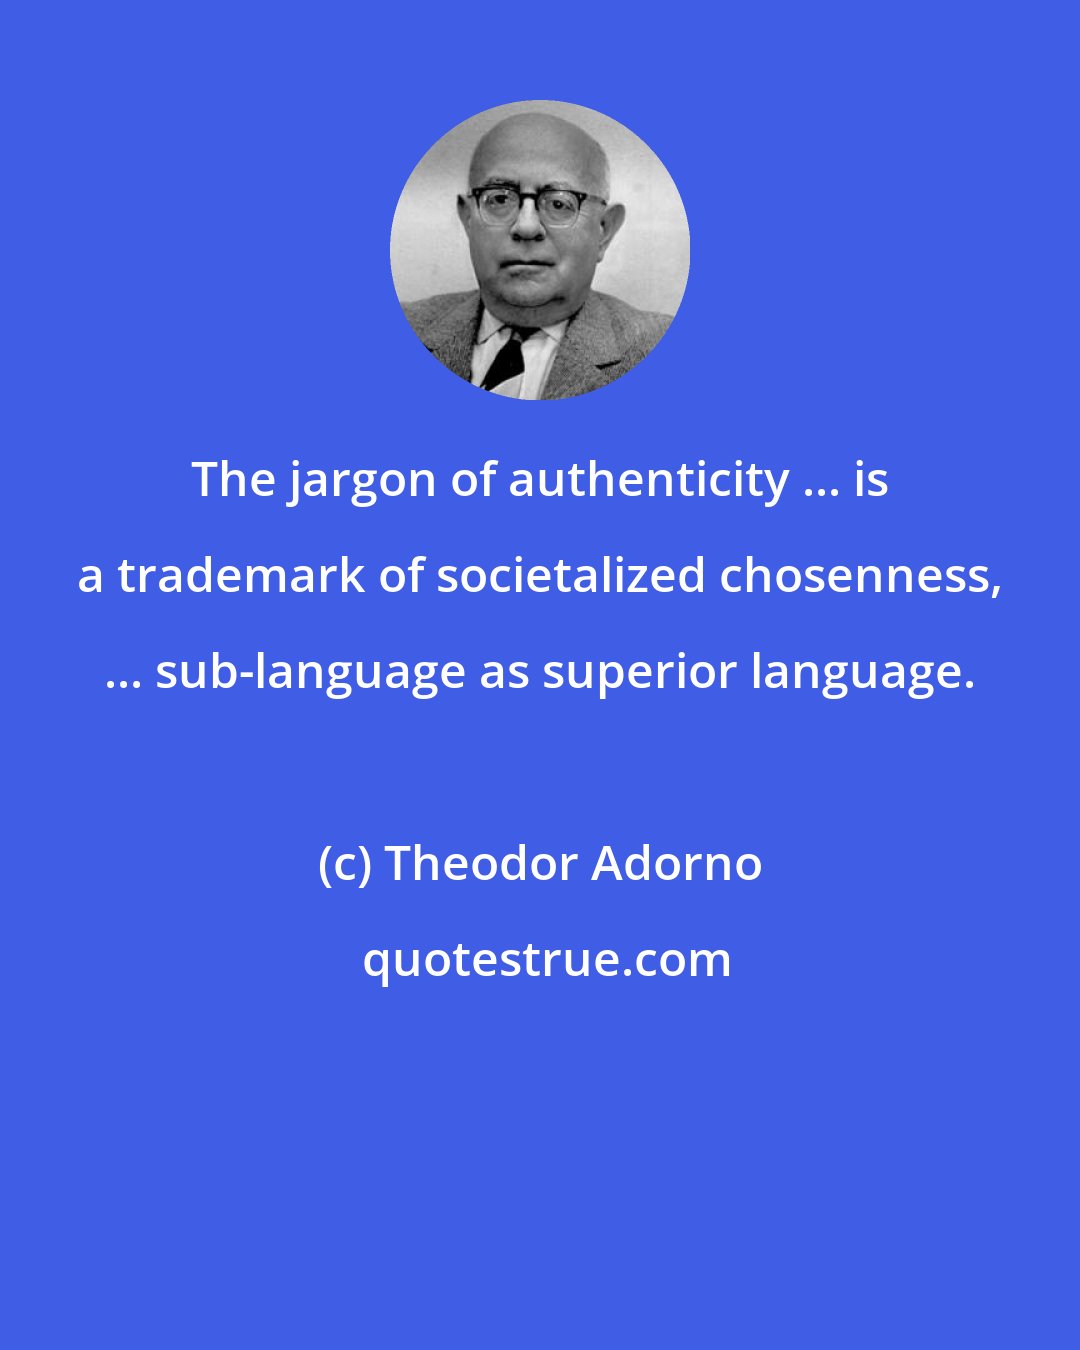 Theodor Adorno: The jargon of authenticity ... is a trademark of societalized chosenness, ... sub-language as superior language.